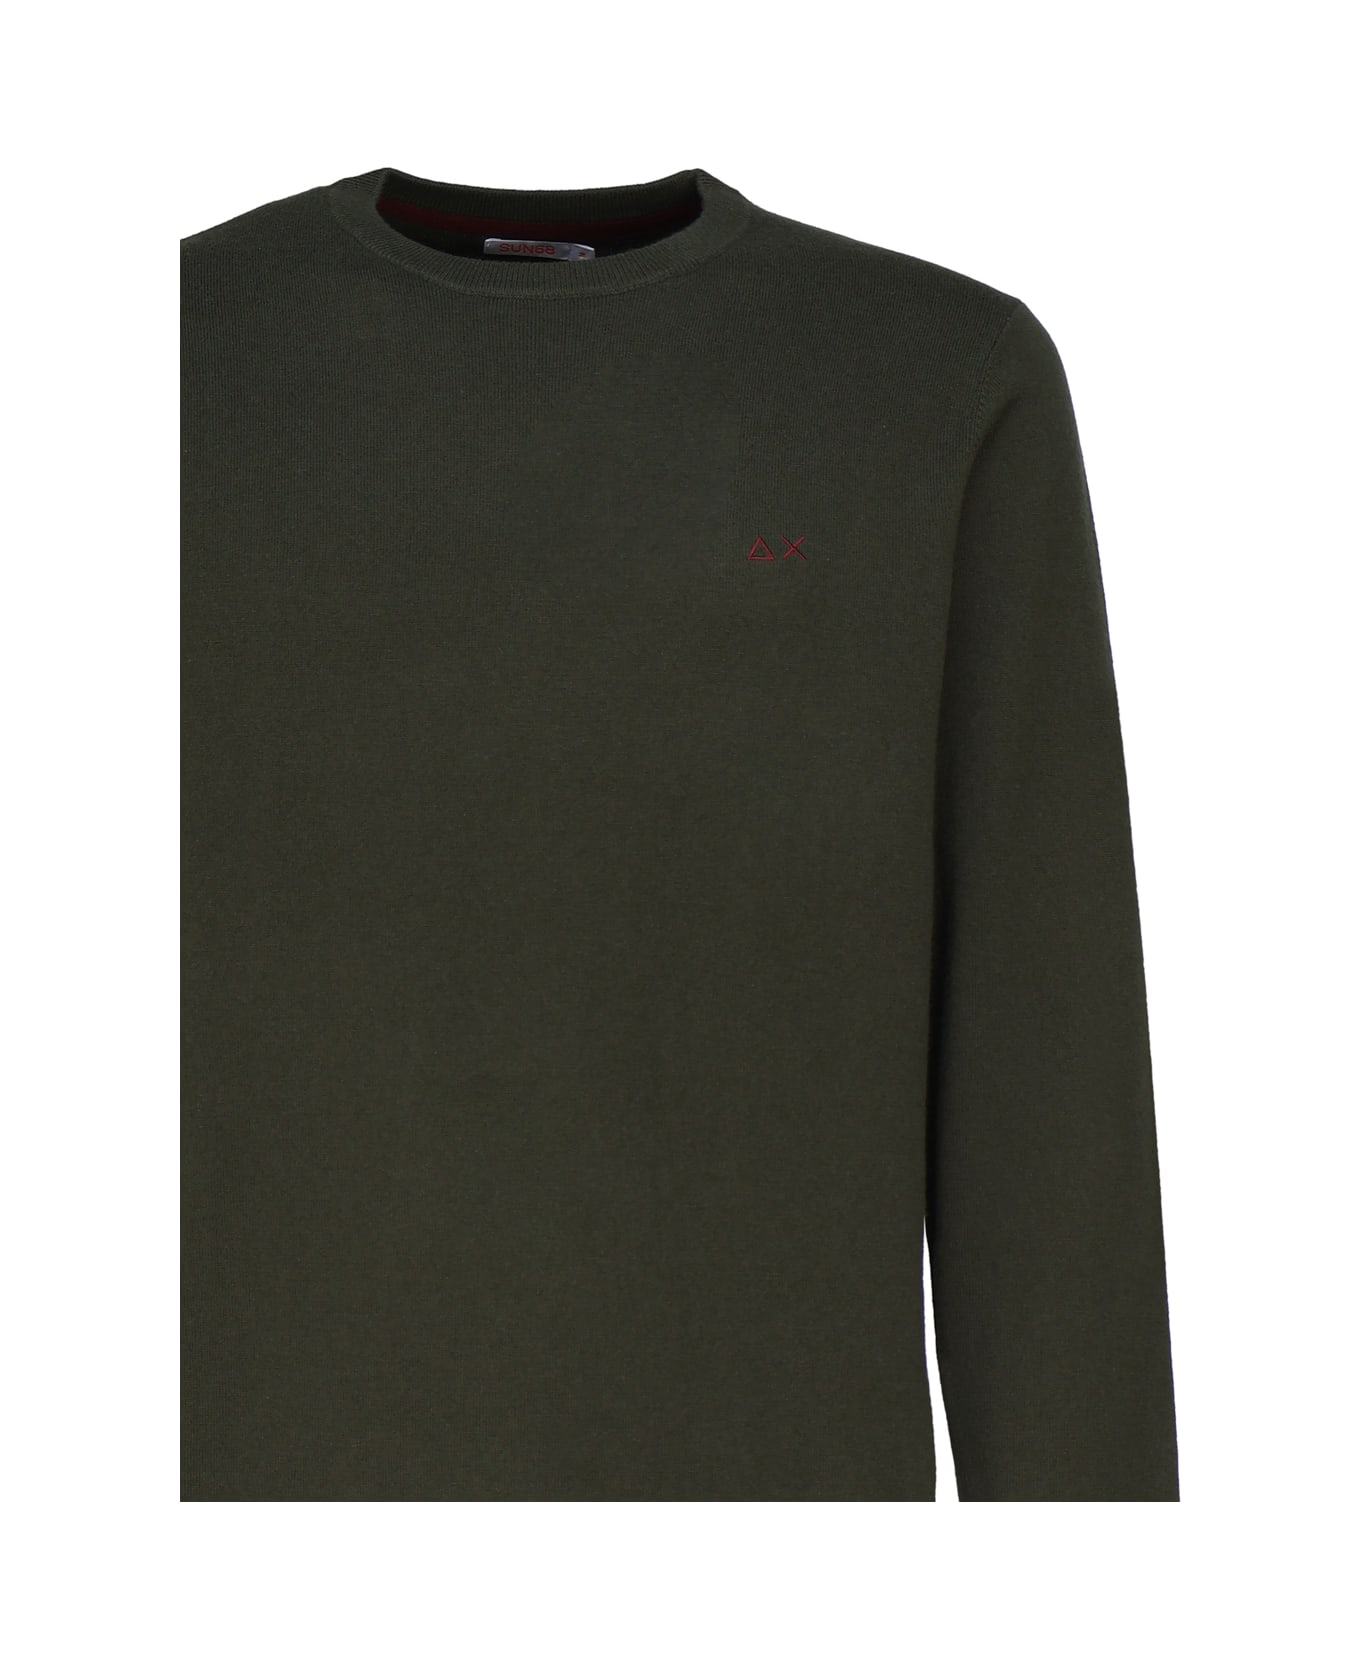 Sun 68 Sweater With Logo - Military green